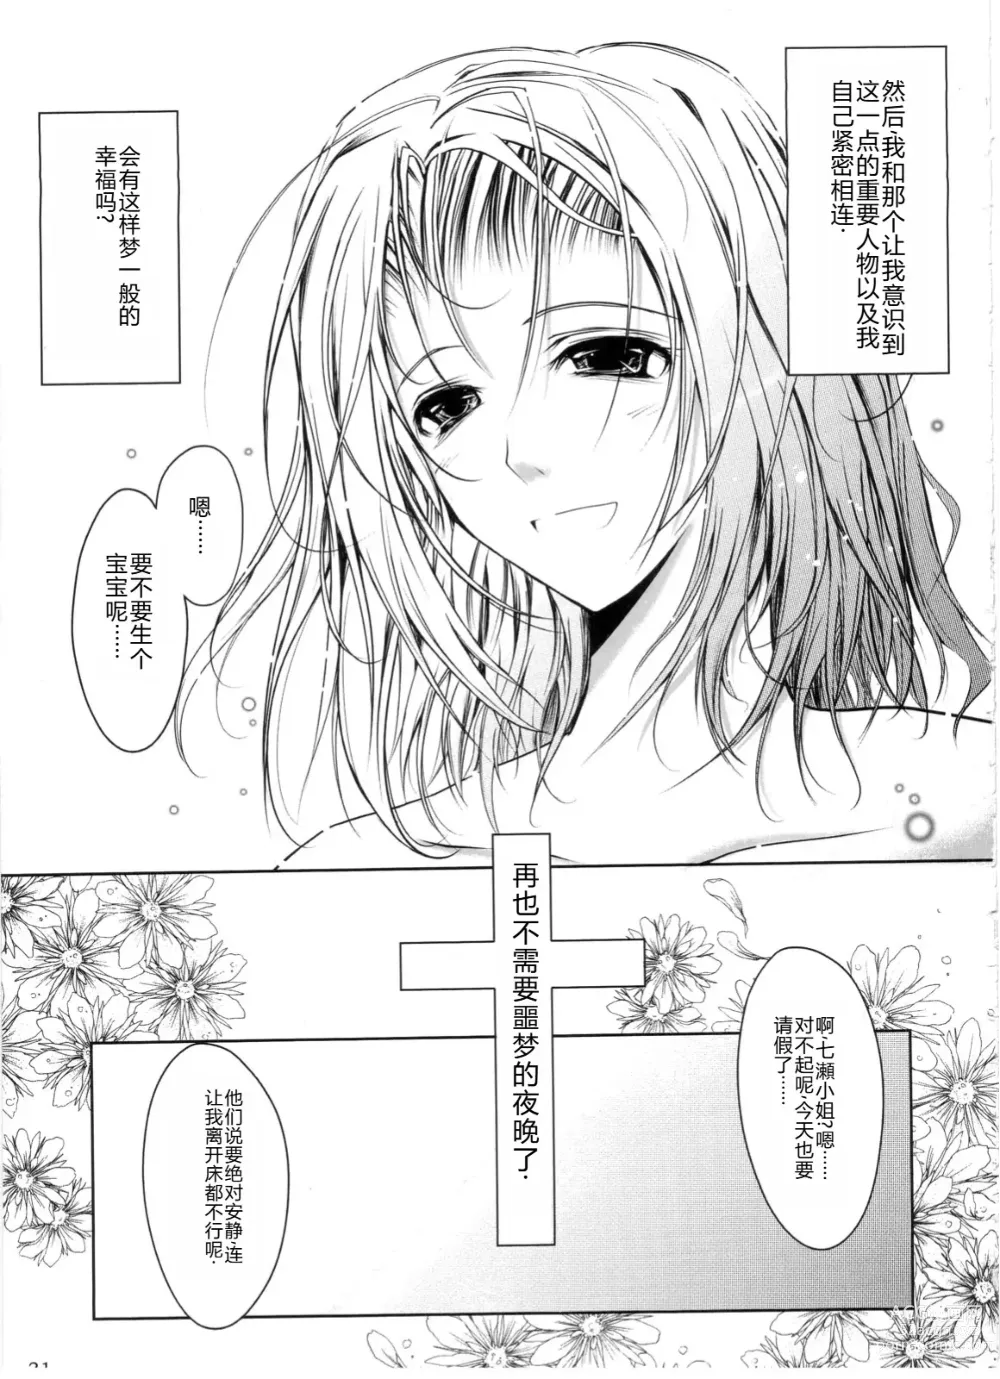 Page 30 of doujinshi Otome Byoutou